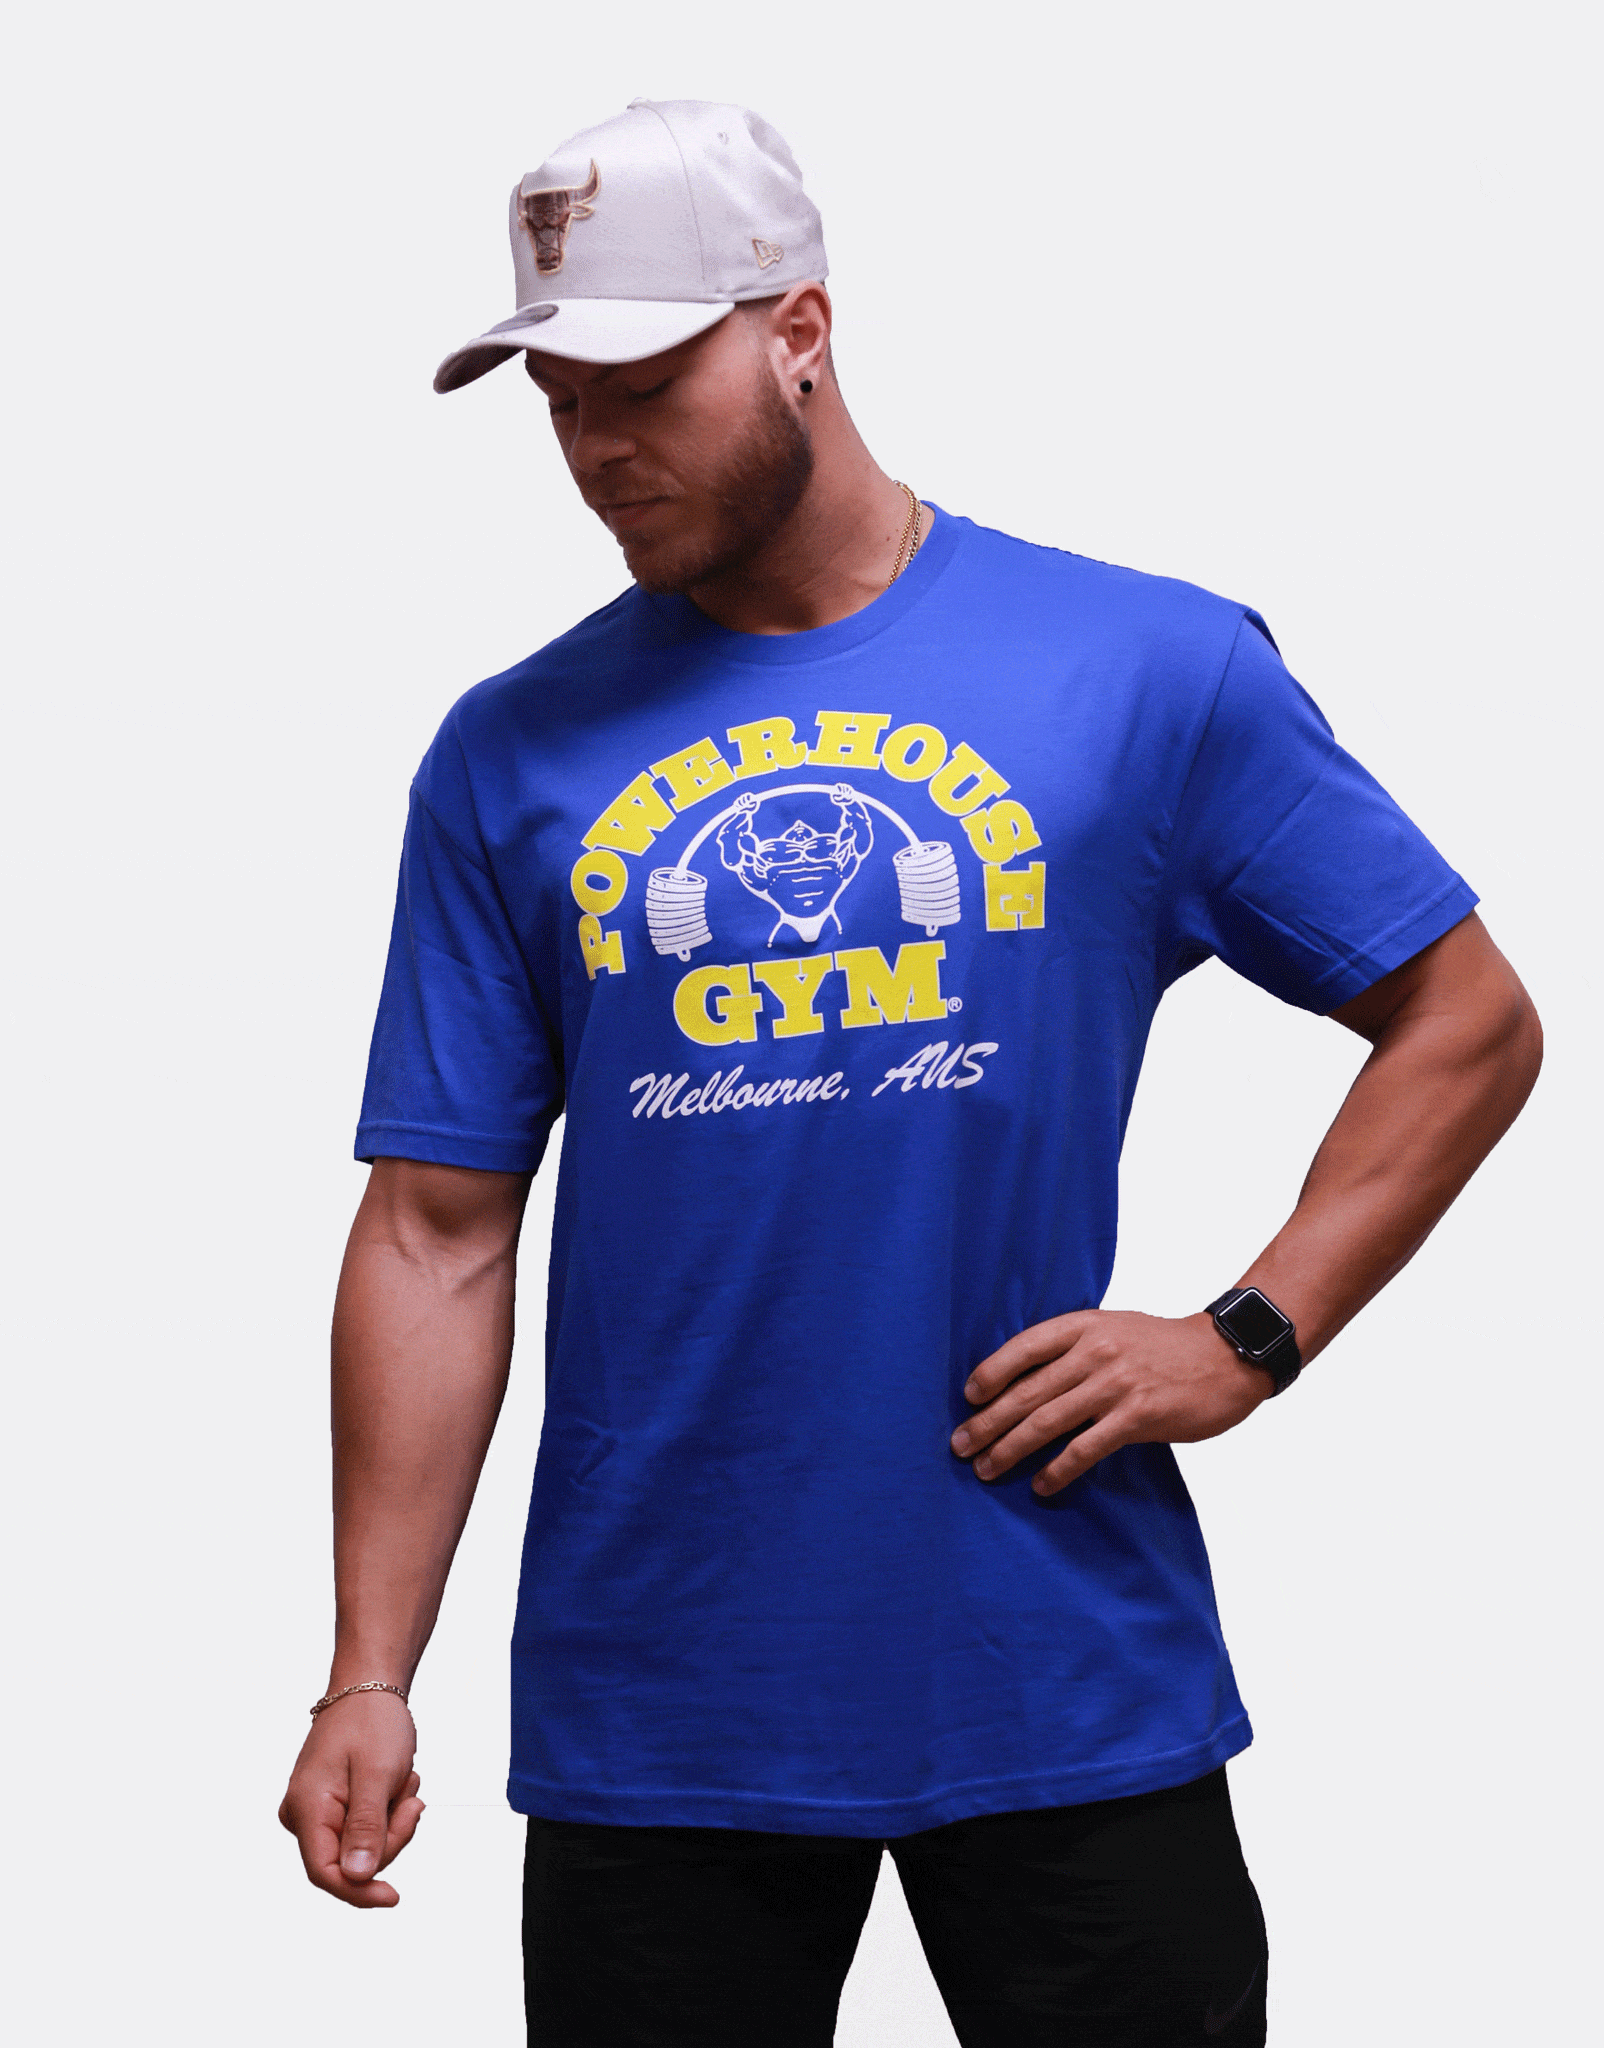 Powerhouse Gym Pro Shop Small Block T-Shirt Royal Blue/Yellow